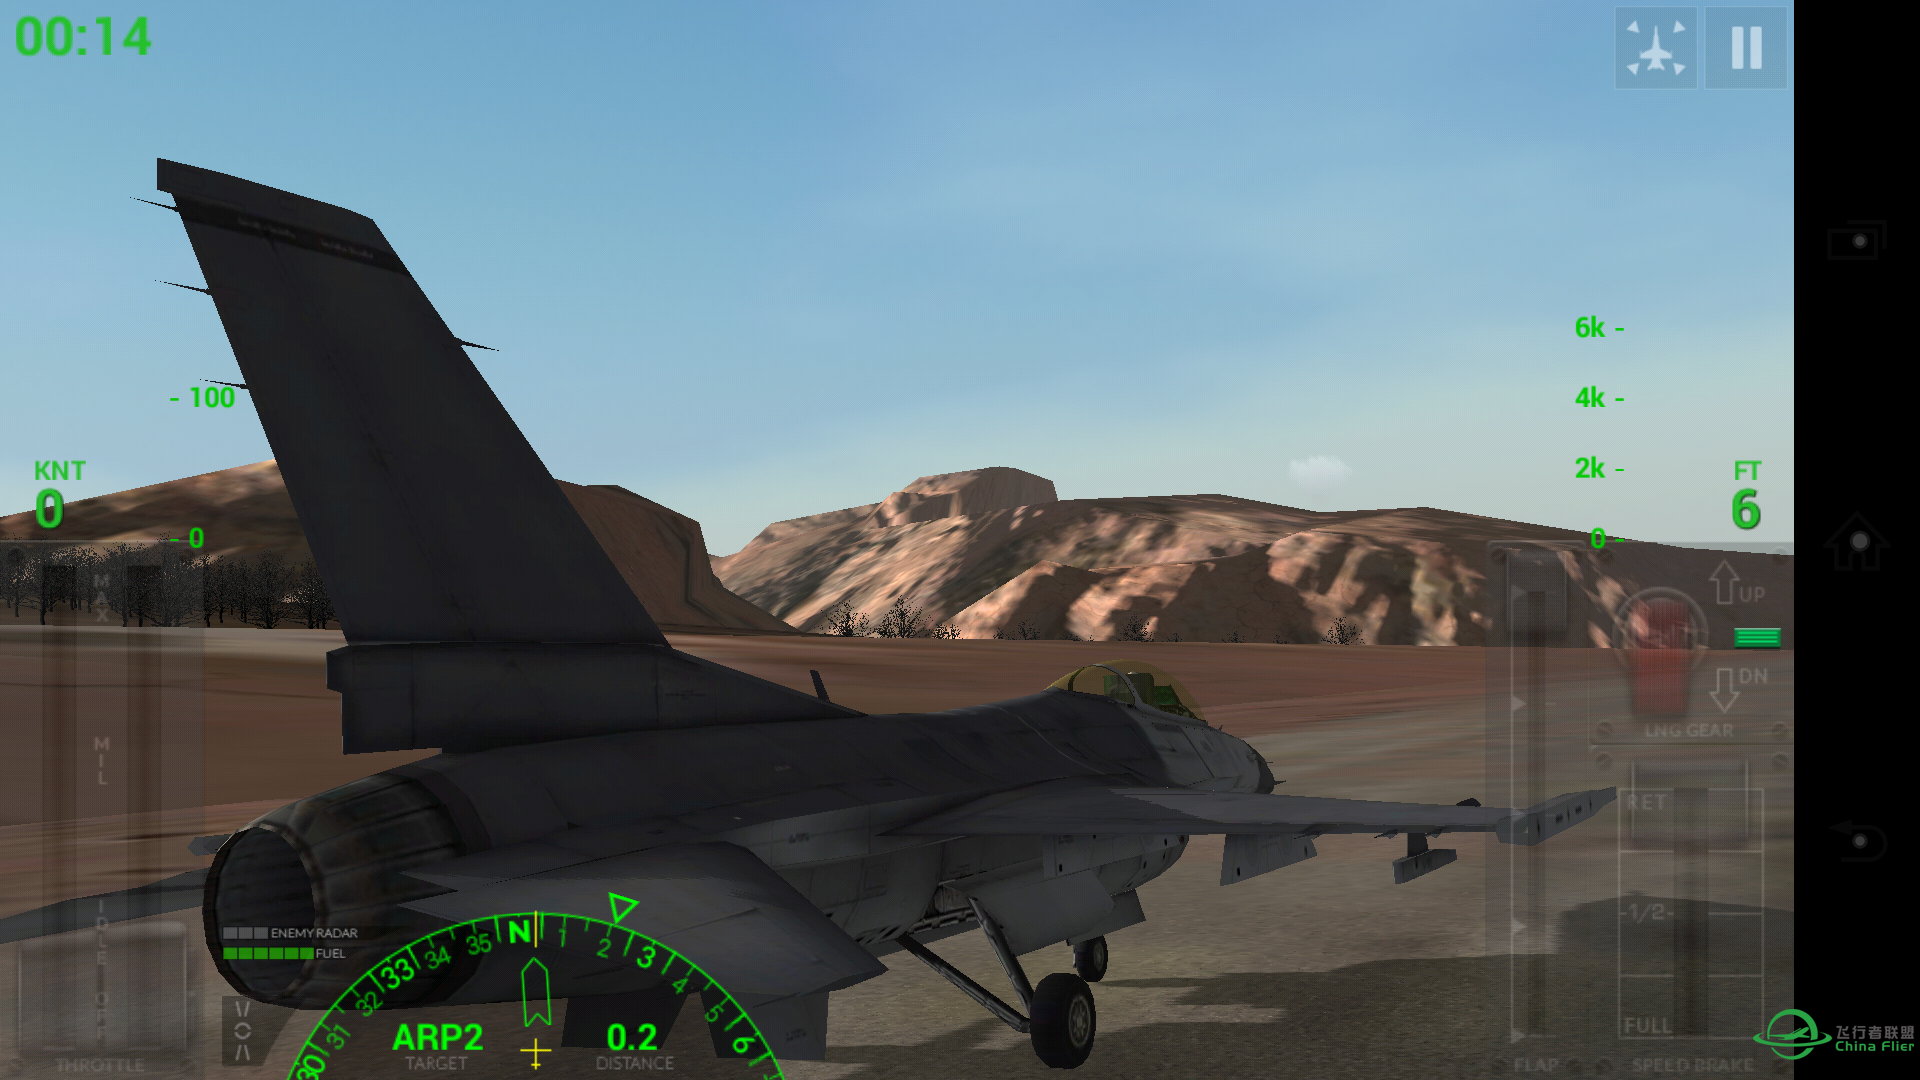 [截图而已]F18 Carrier Landing2 Pro-4947 